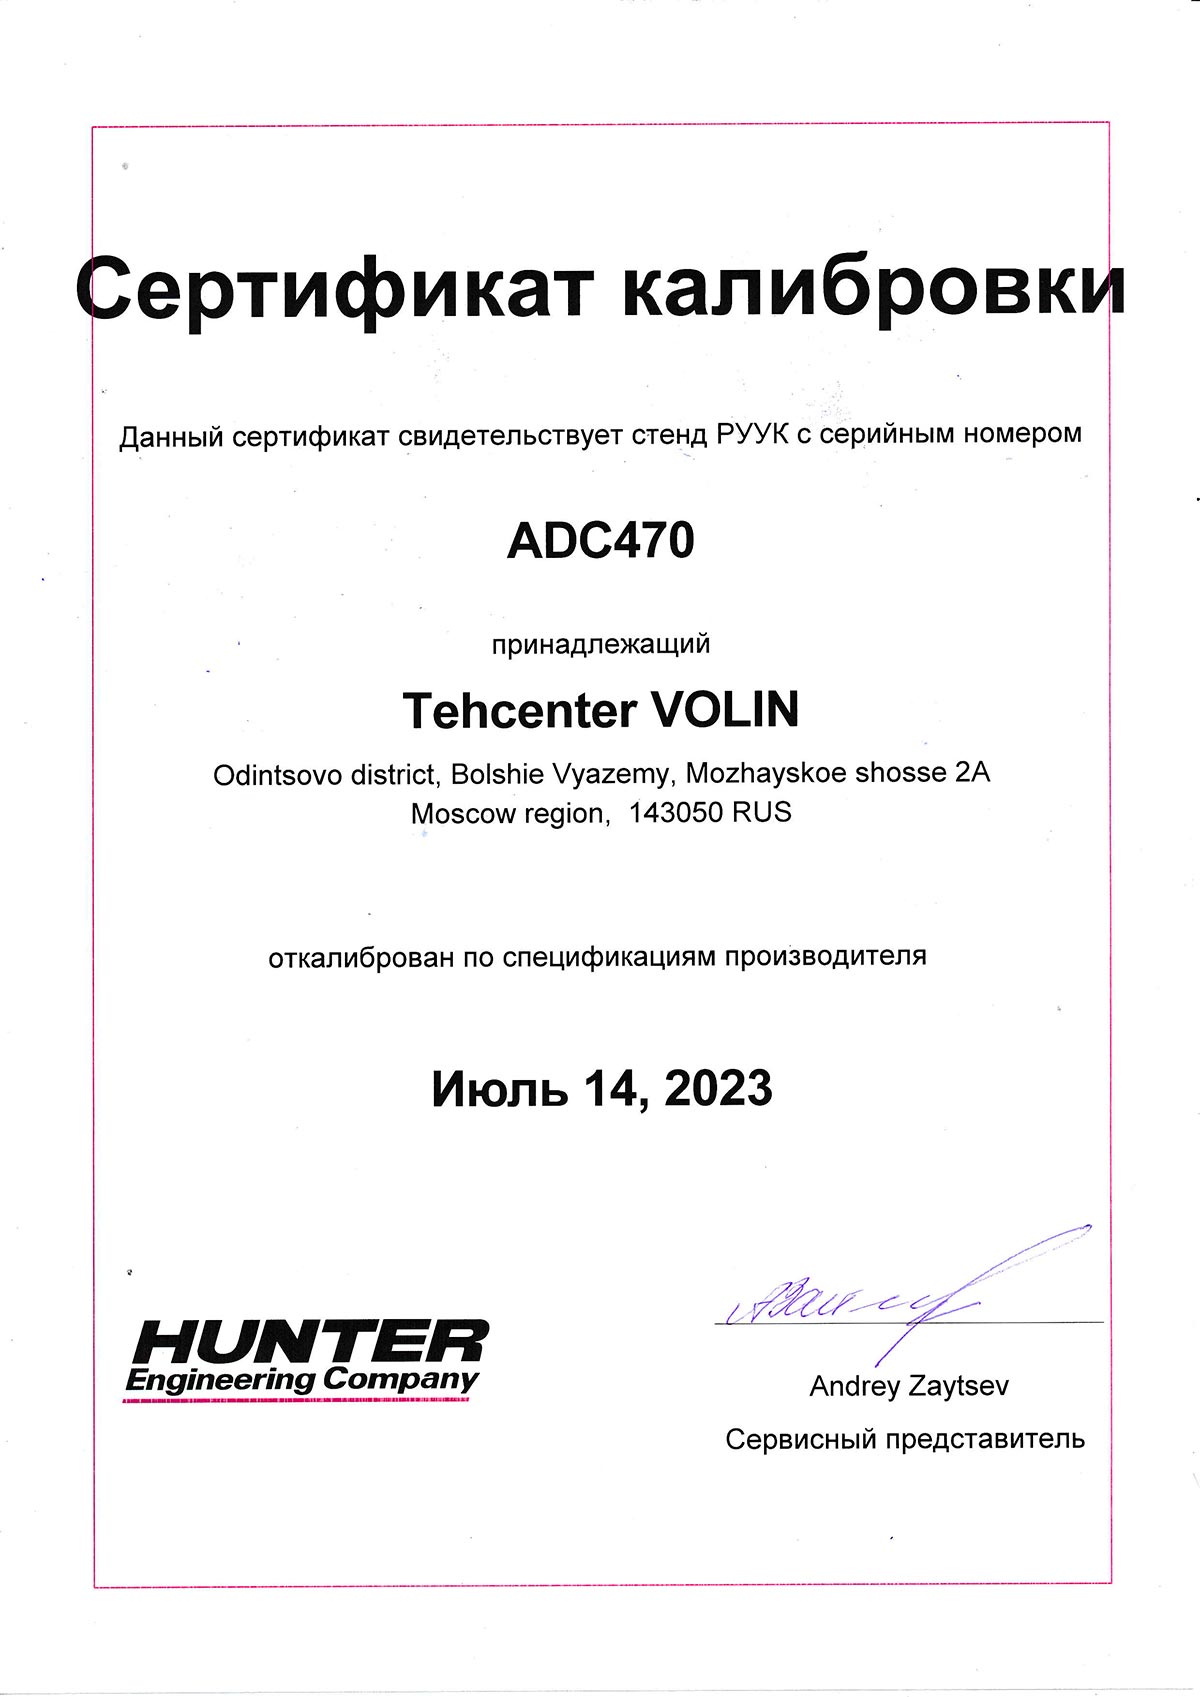 Сертификат калибровки оборудования ТЦ «ВОЛИН» от Hunter Engineering Company